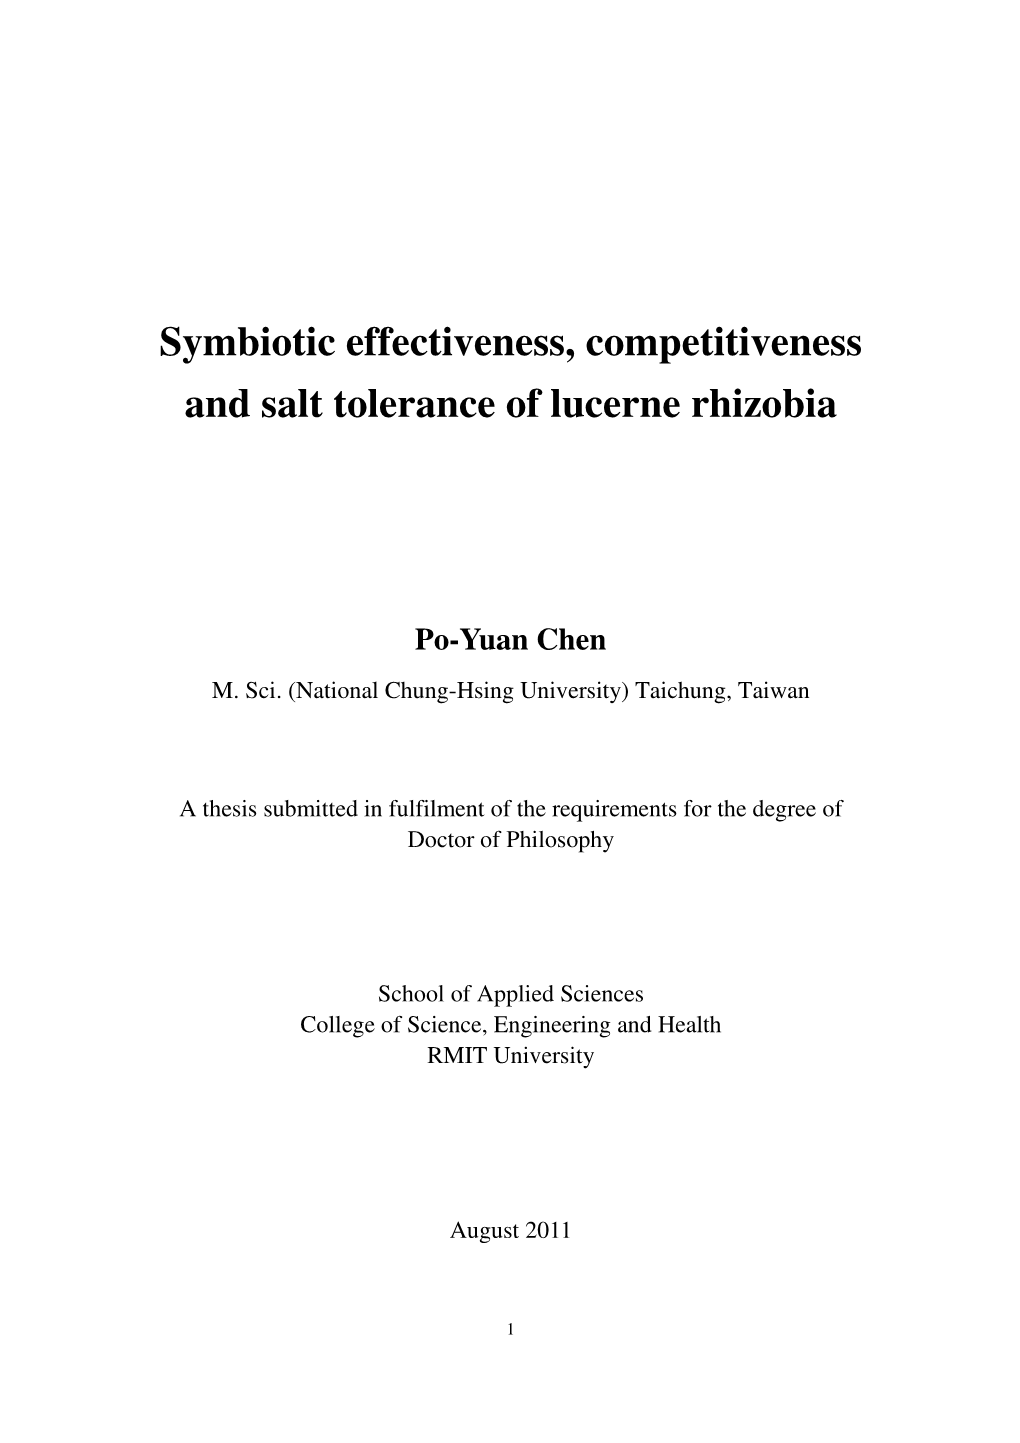 Symbiotic Effectiveness, Competitiveness and Salt Tolerance of Lucerne Rhizobia